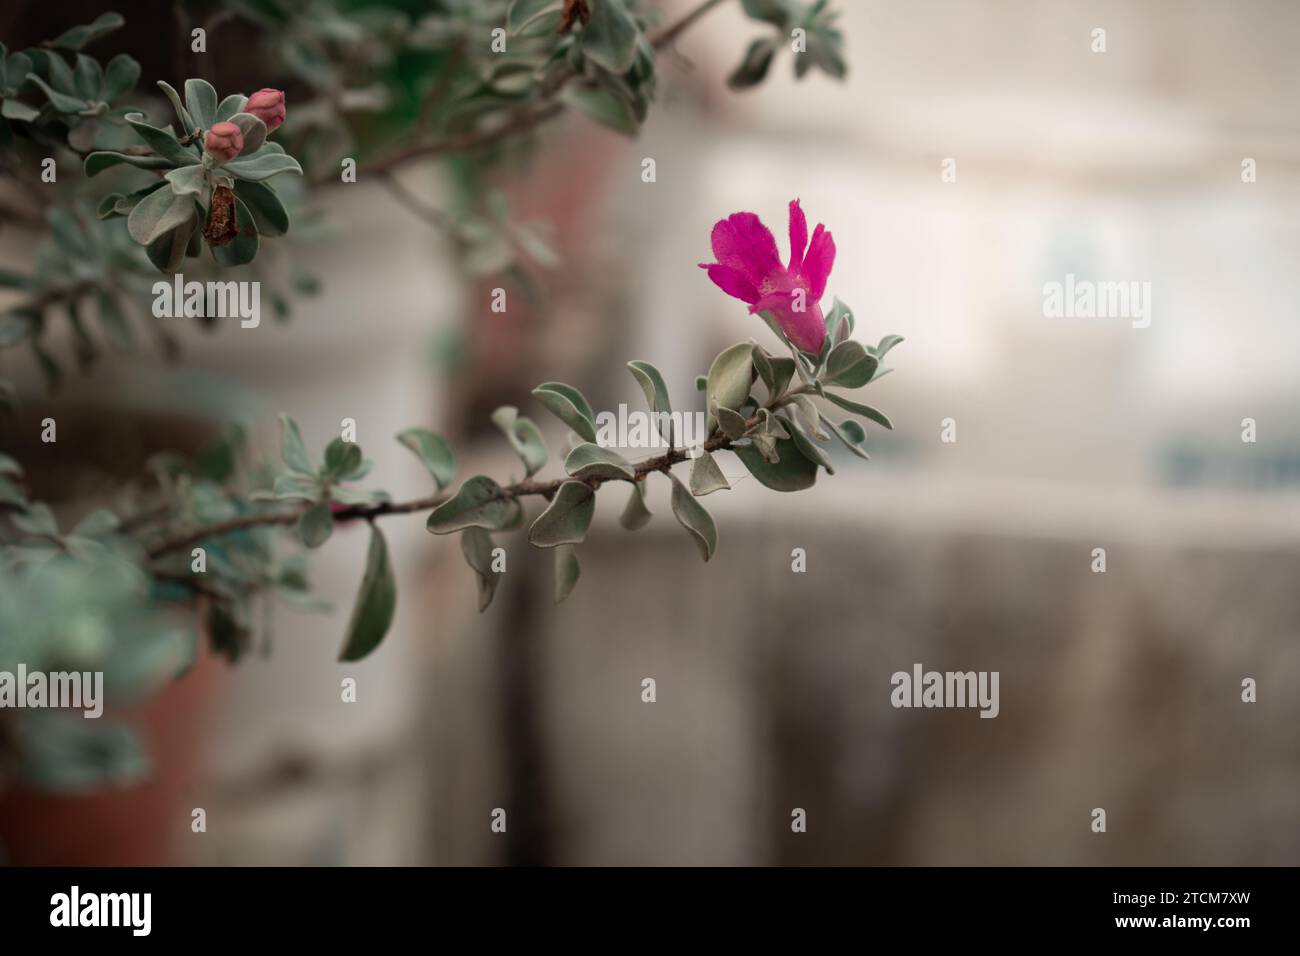 Beutiful pink flower 4k wallpaper Stock Photo